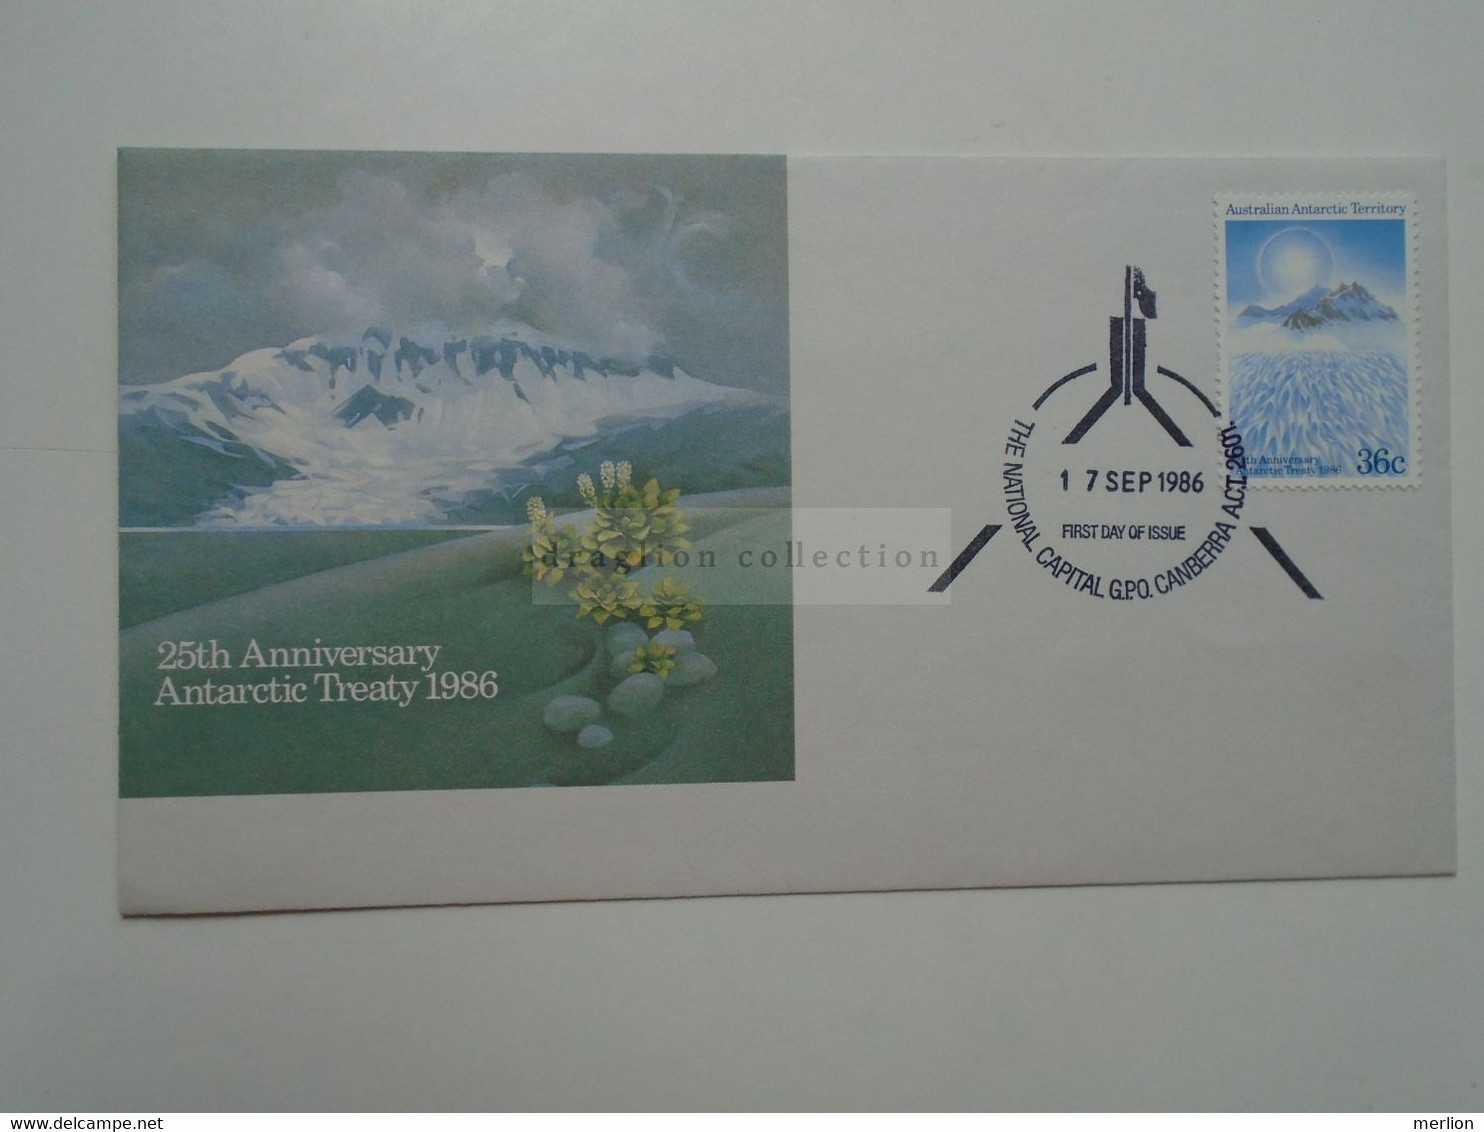 D182218  Australia  - Antarctic Territory AAT  -  25th Anniversary Antarctic Treaty  1986 - FDC